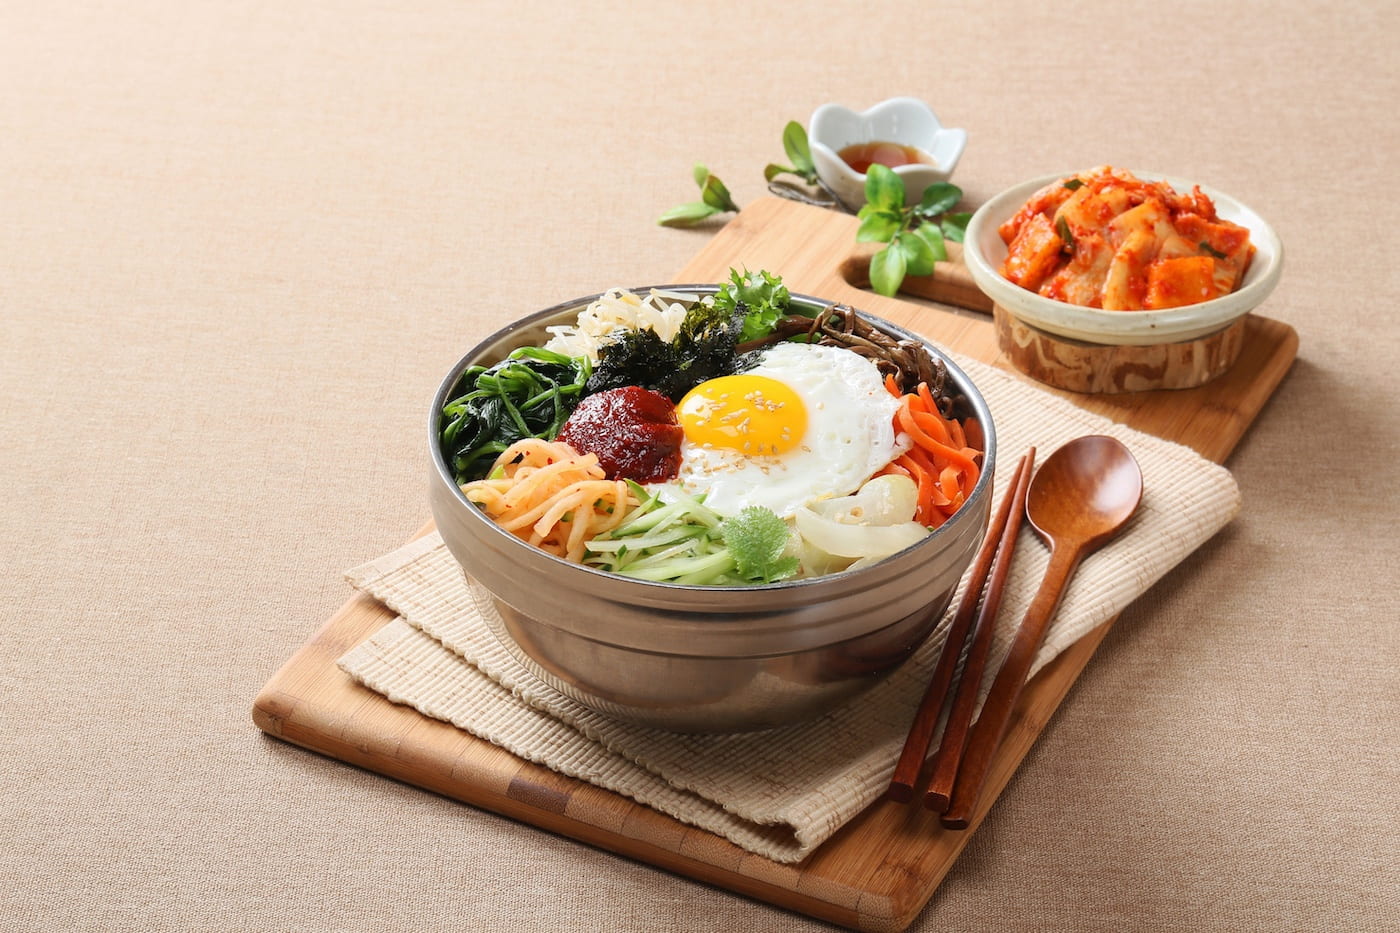 Korean food is gaining popularity in the U.S. (Image by changupn via Pixabay)